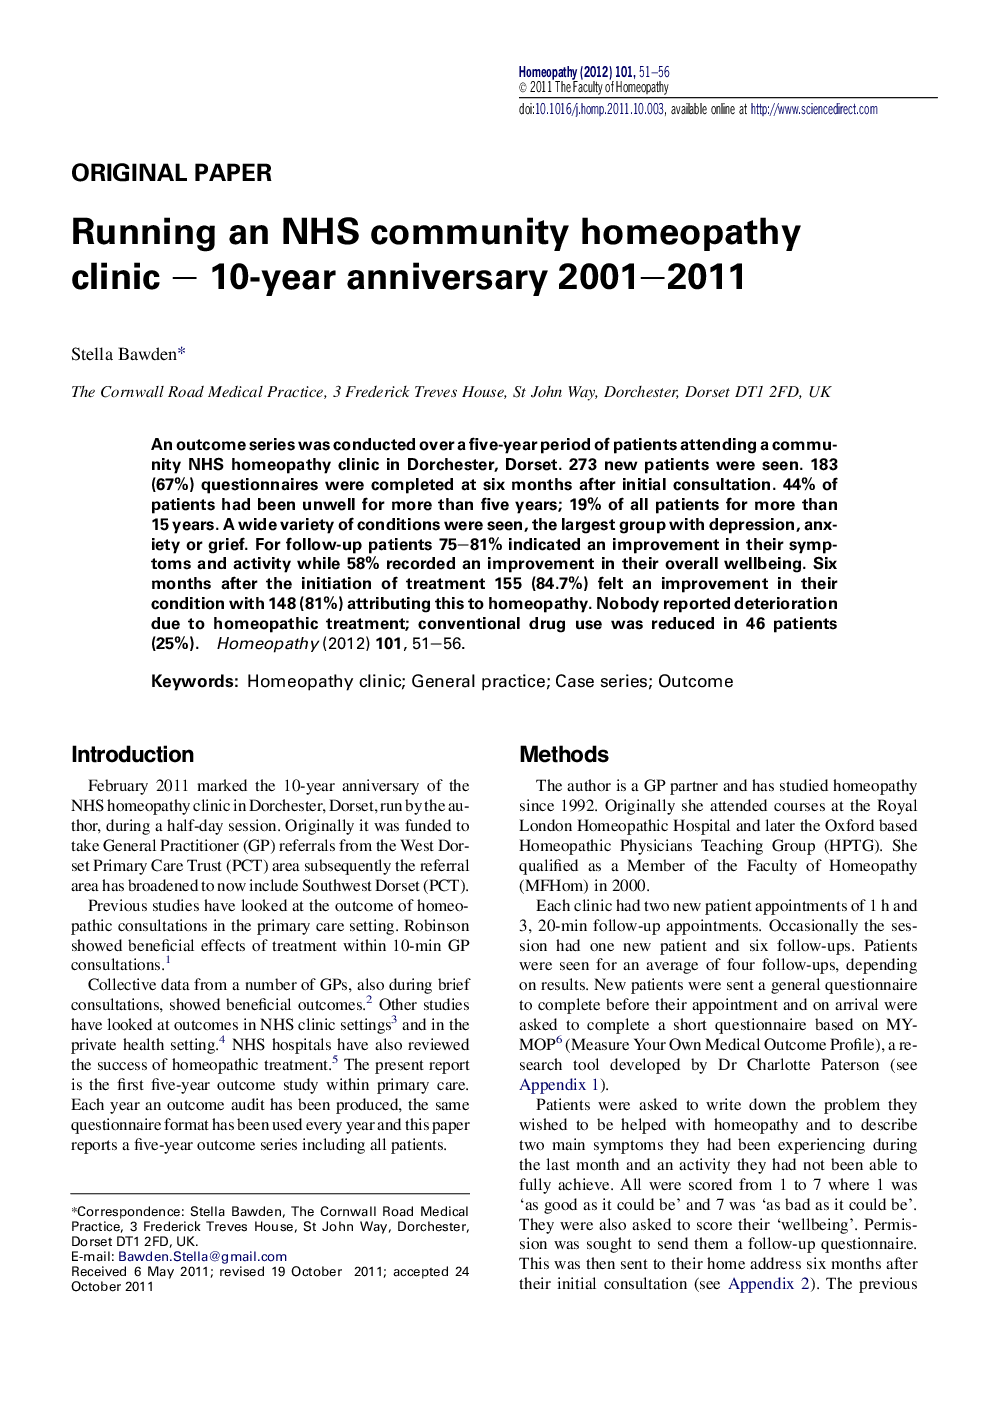 Running an NHS community homeopathy clinic – 10-year anniversary 2001–2011